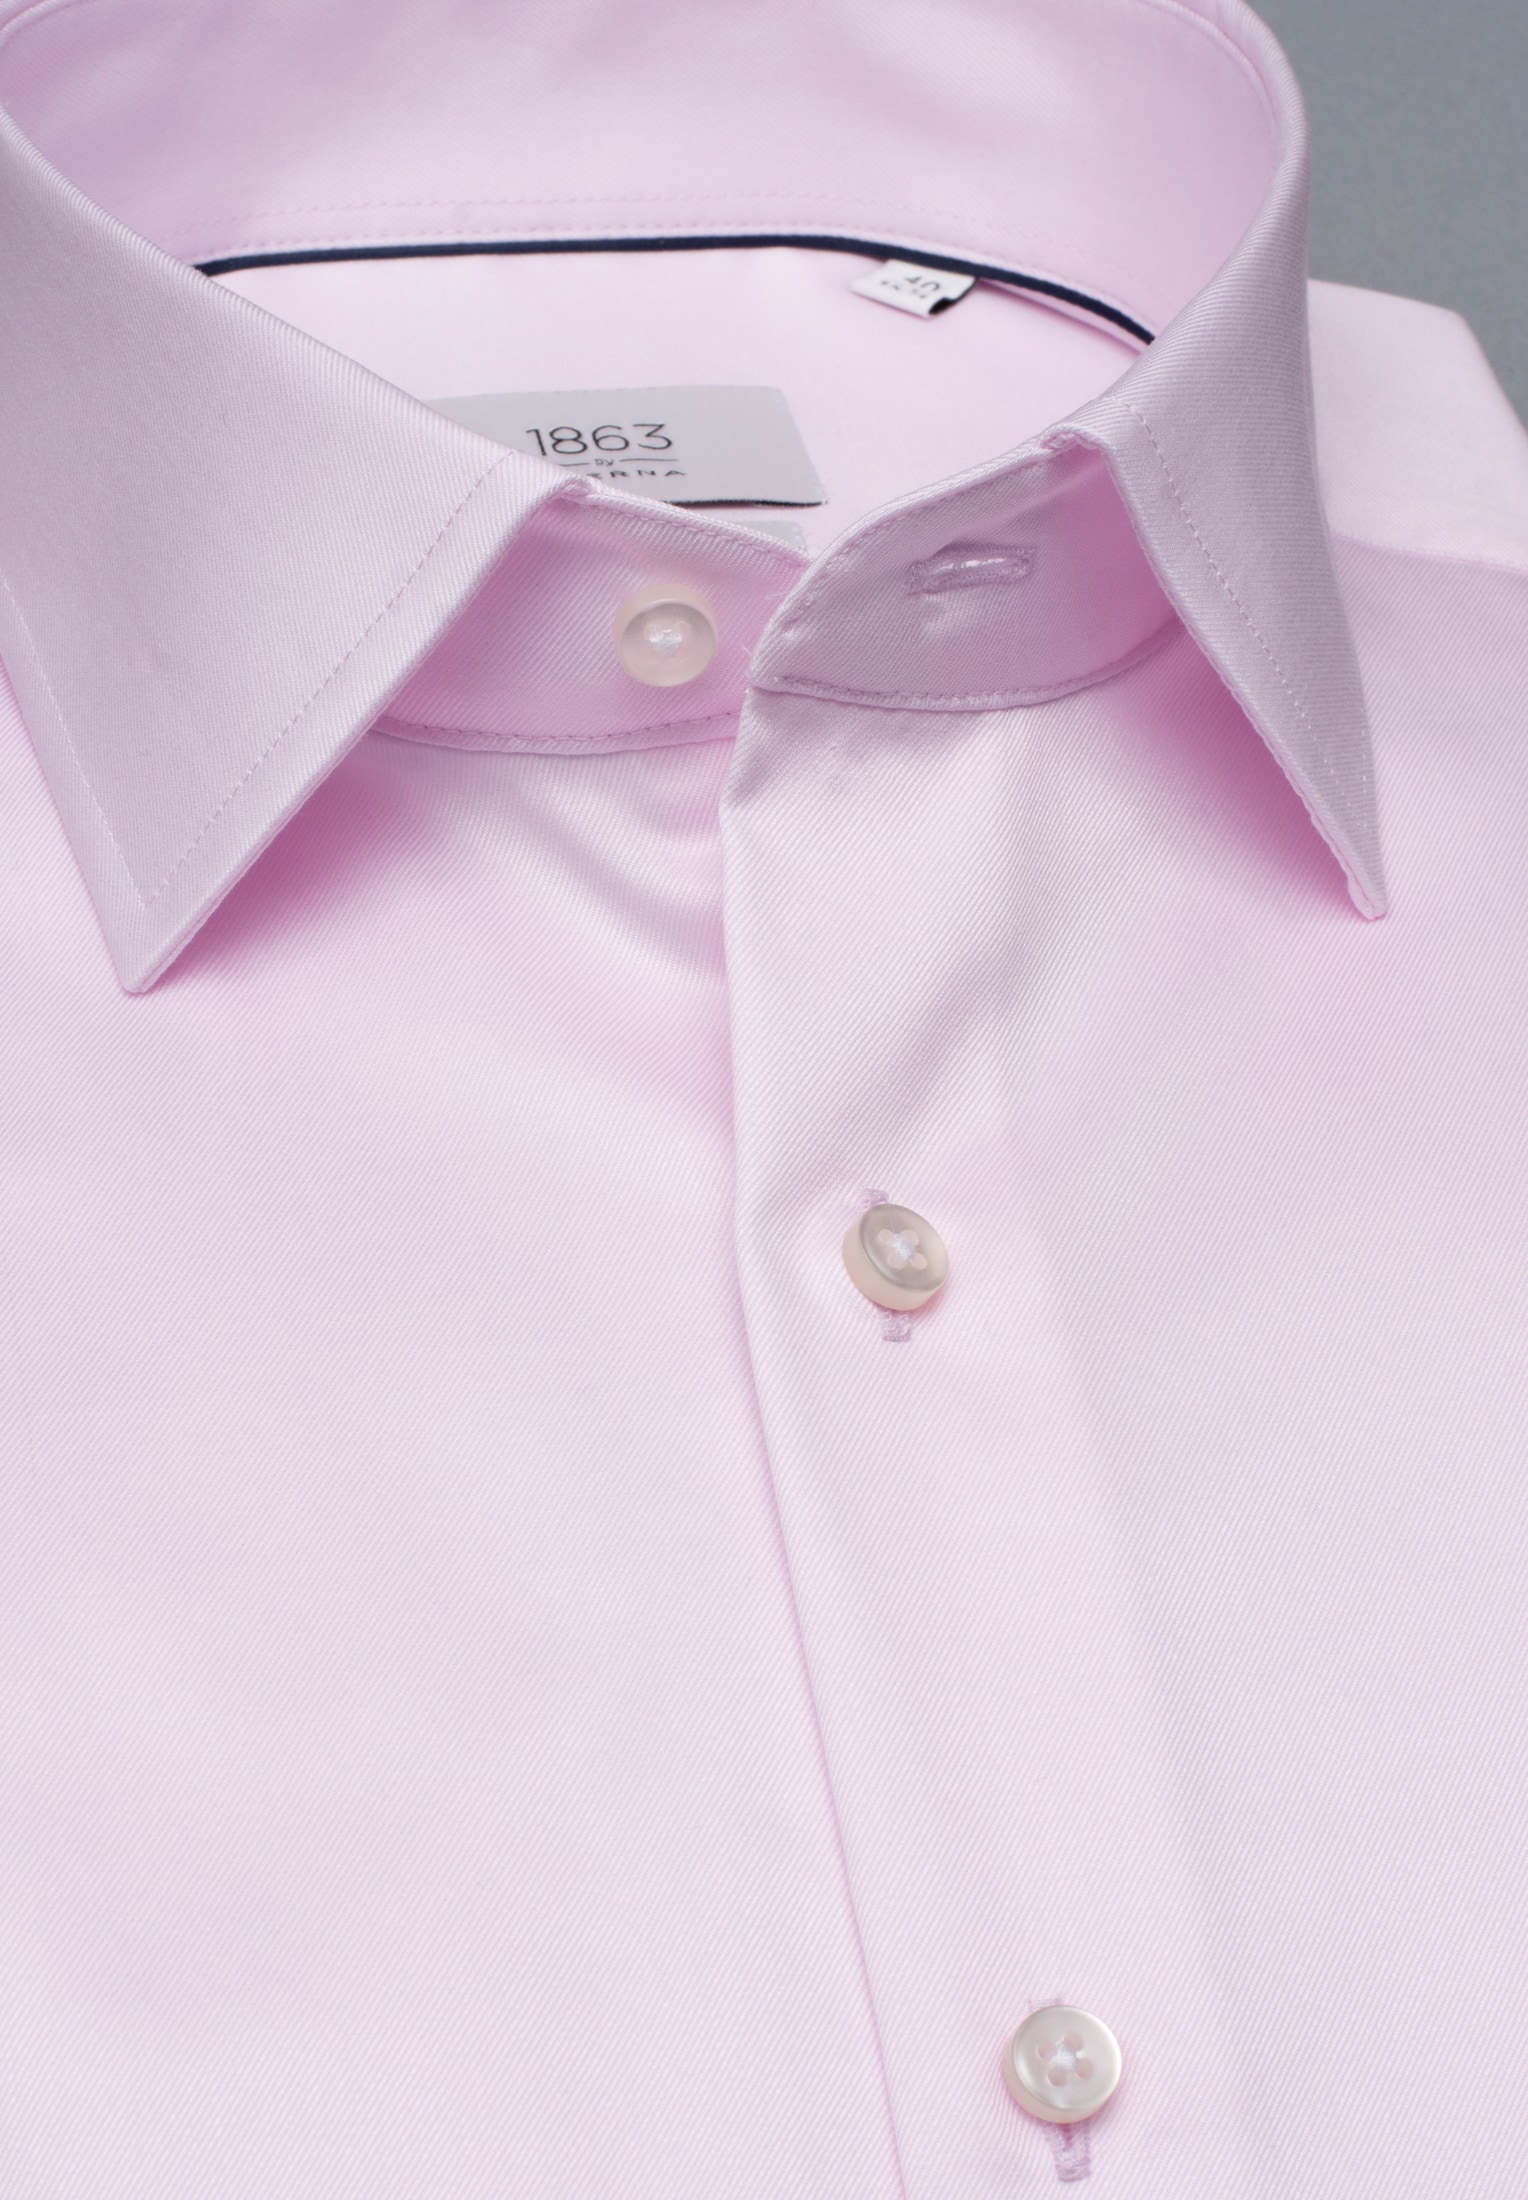 COMFORT FIT Luxury Shirt in rubinrot unifarben | rubinrot | Langarm | 43 |  1SH00739-05-51-43-1/1